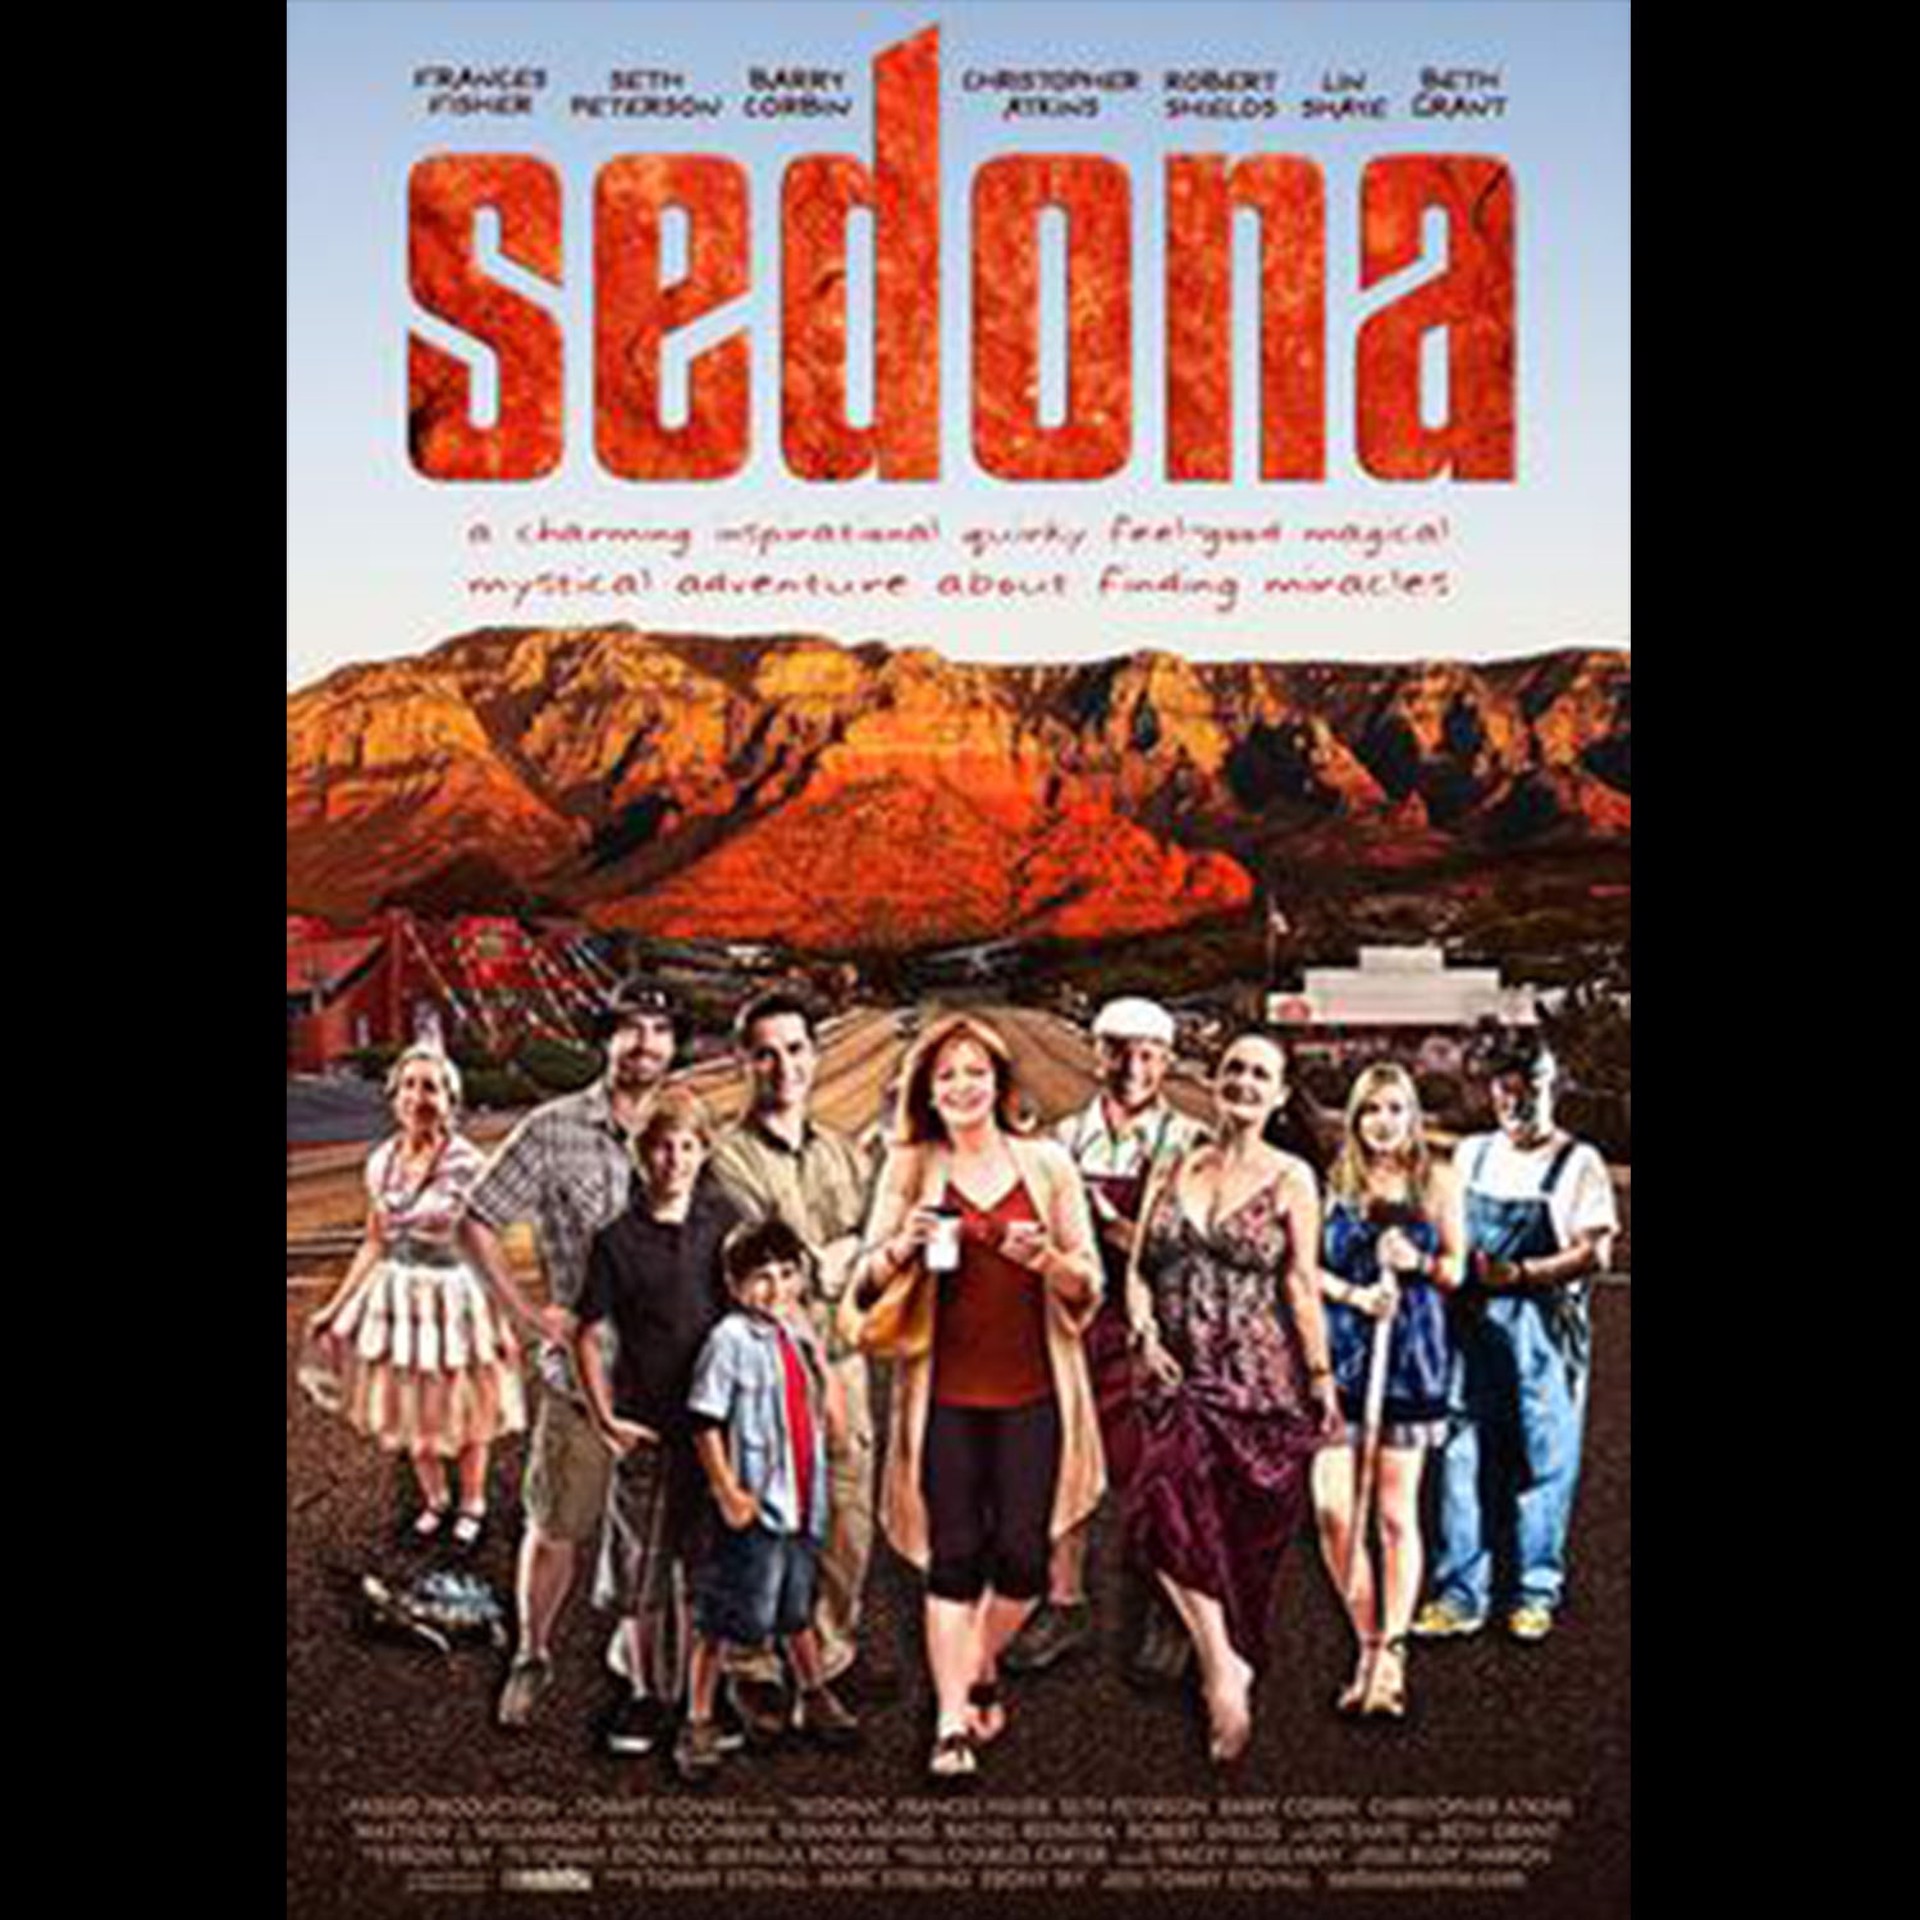 DVD by Sedona The Movie - DVD